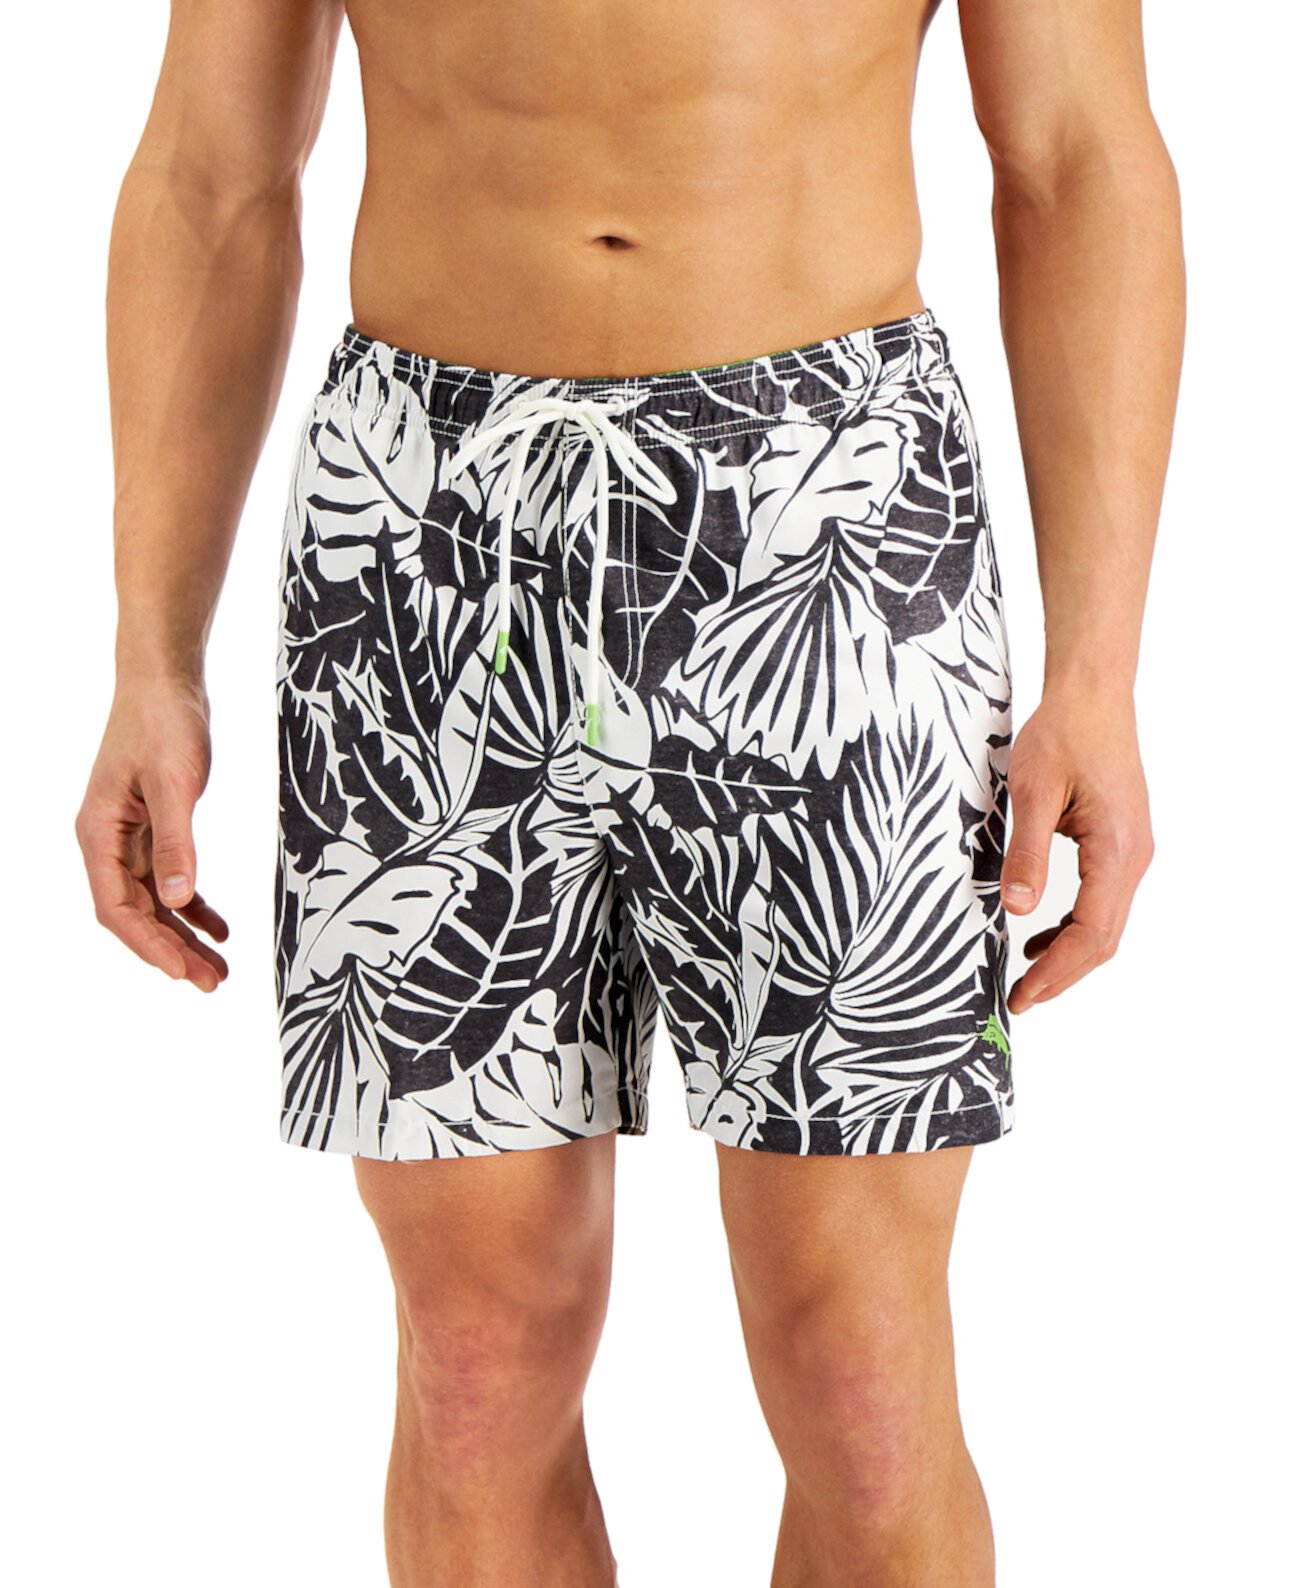 tommy bahama board shorts 9 inseam